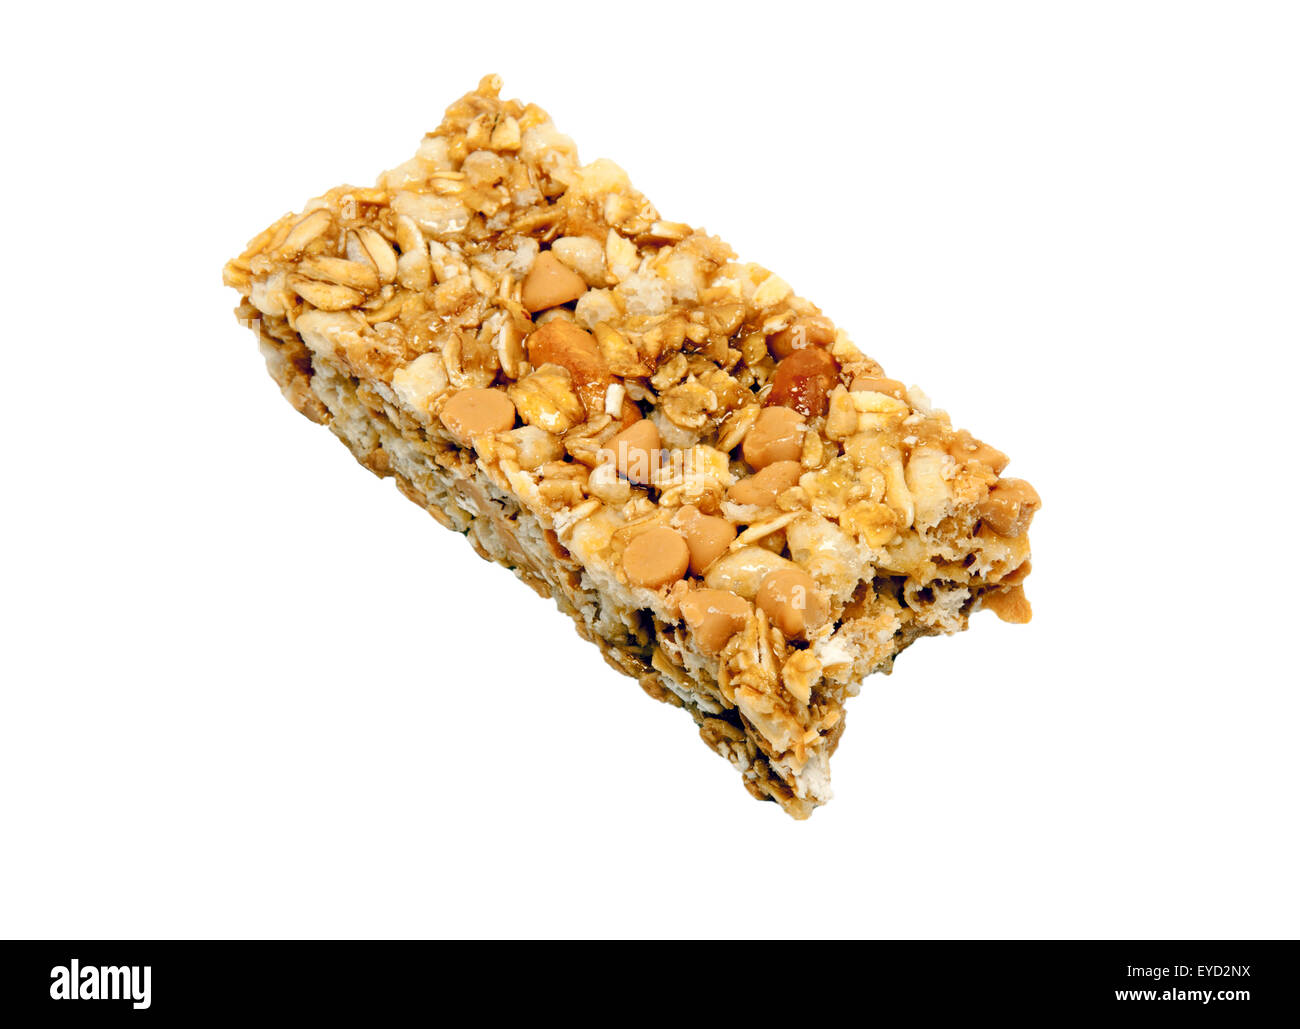 Chewy granola bar bite on white background Stock Photo